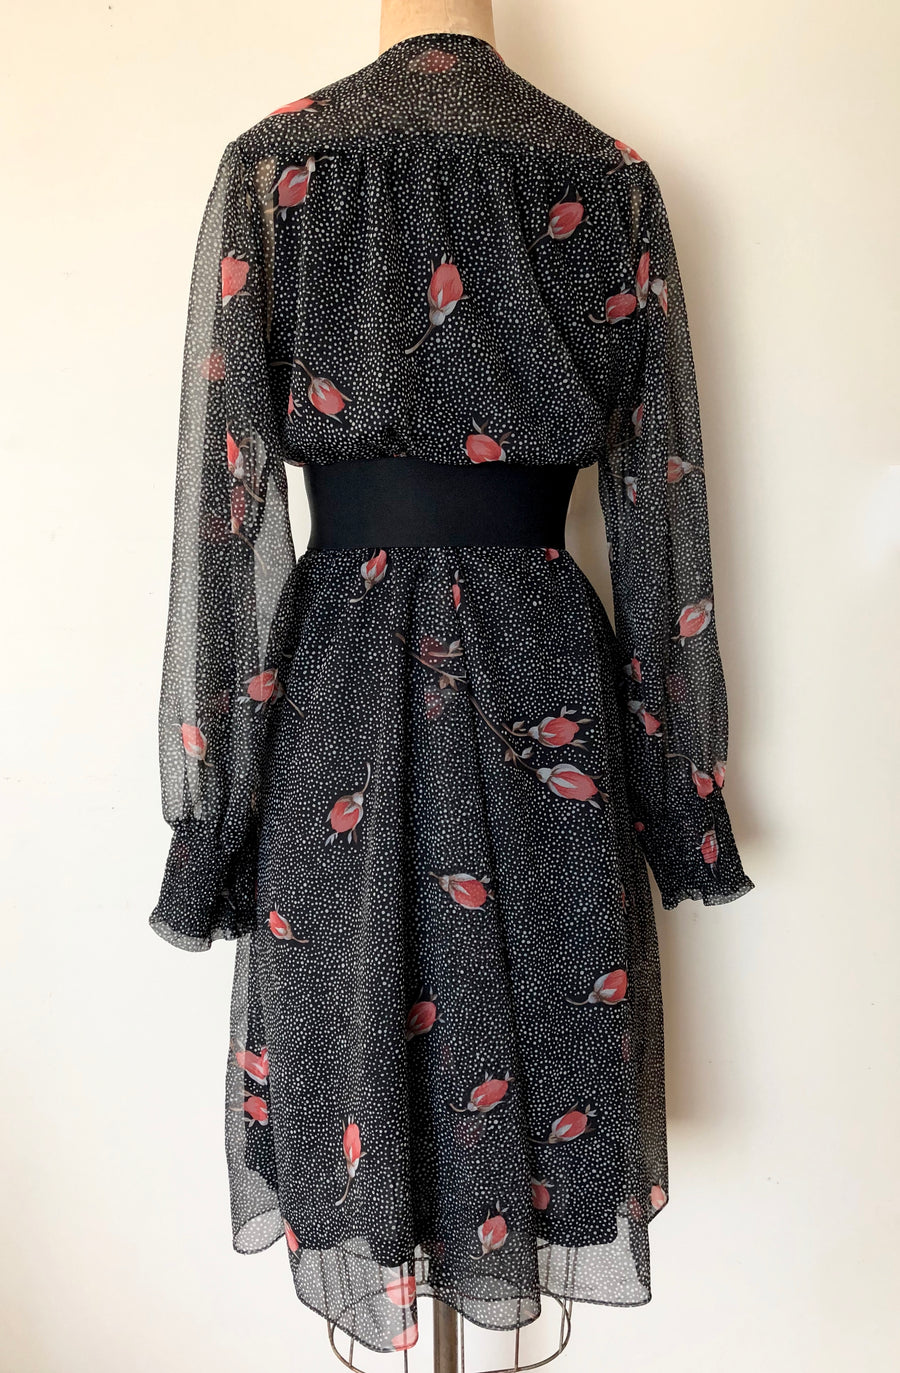 Vintage Rose Bud Print Dress - Size L/XL